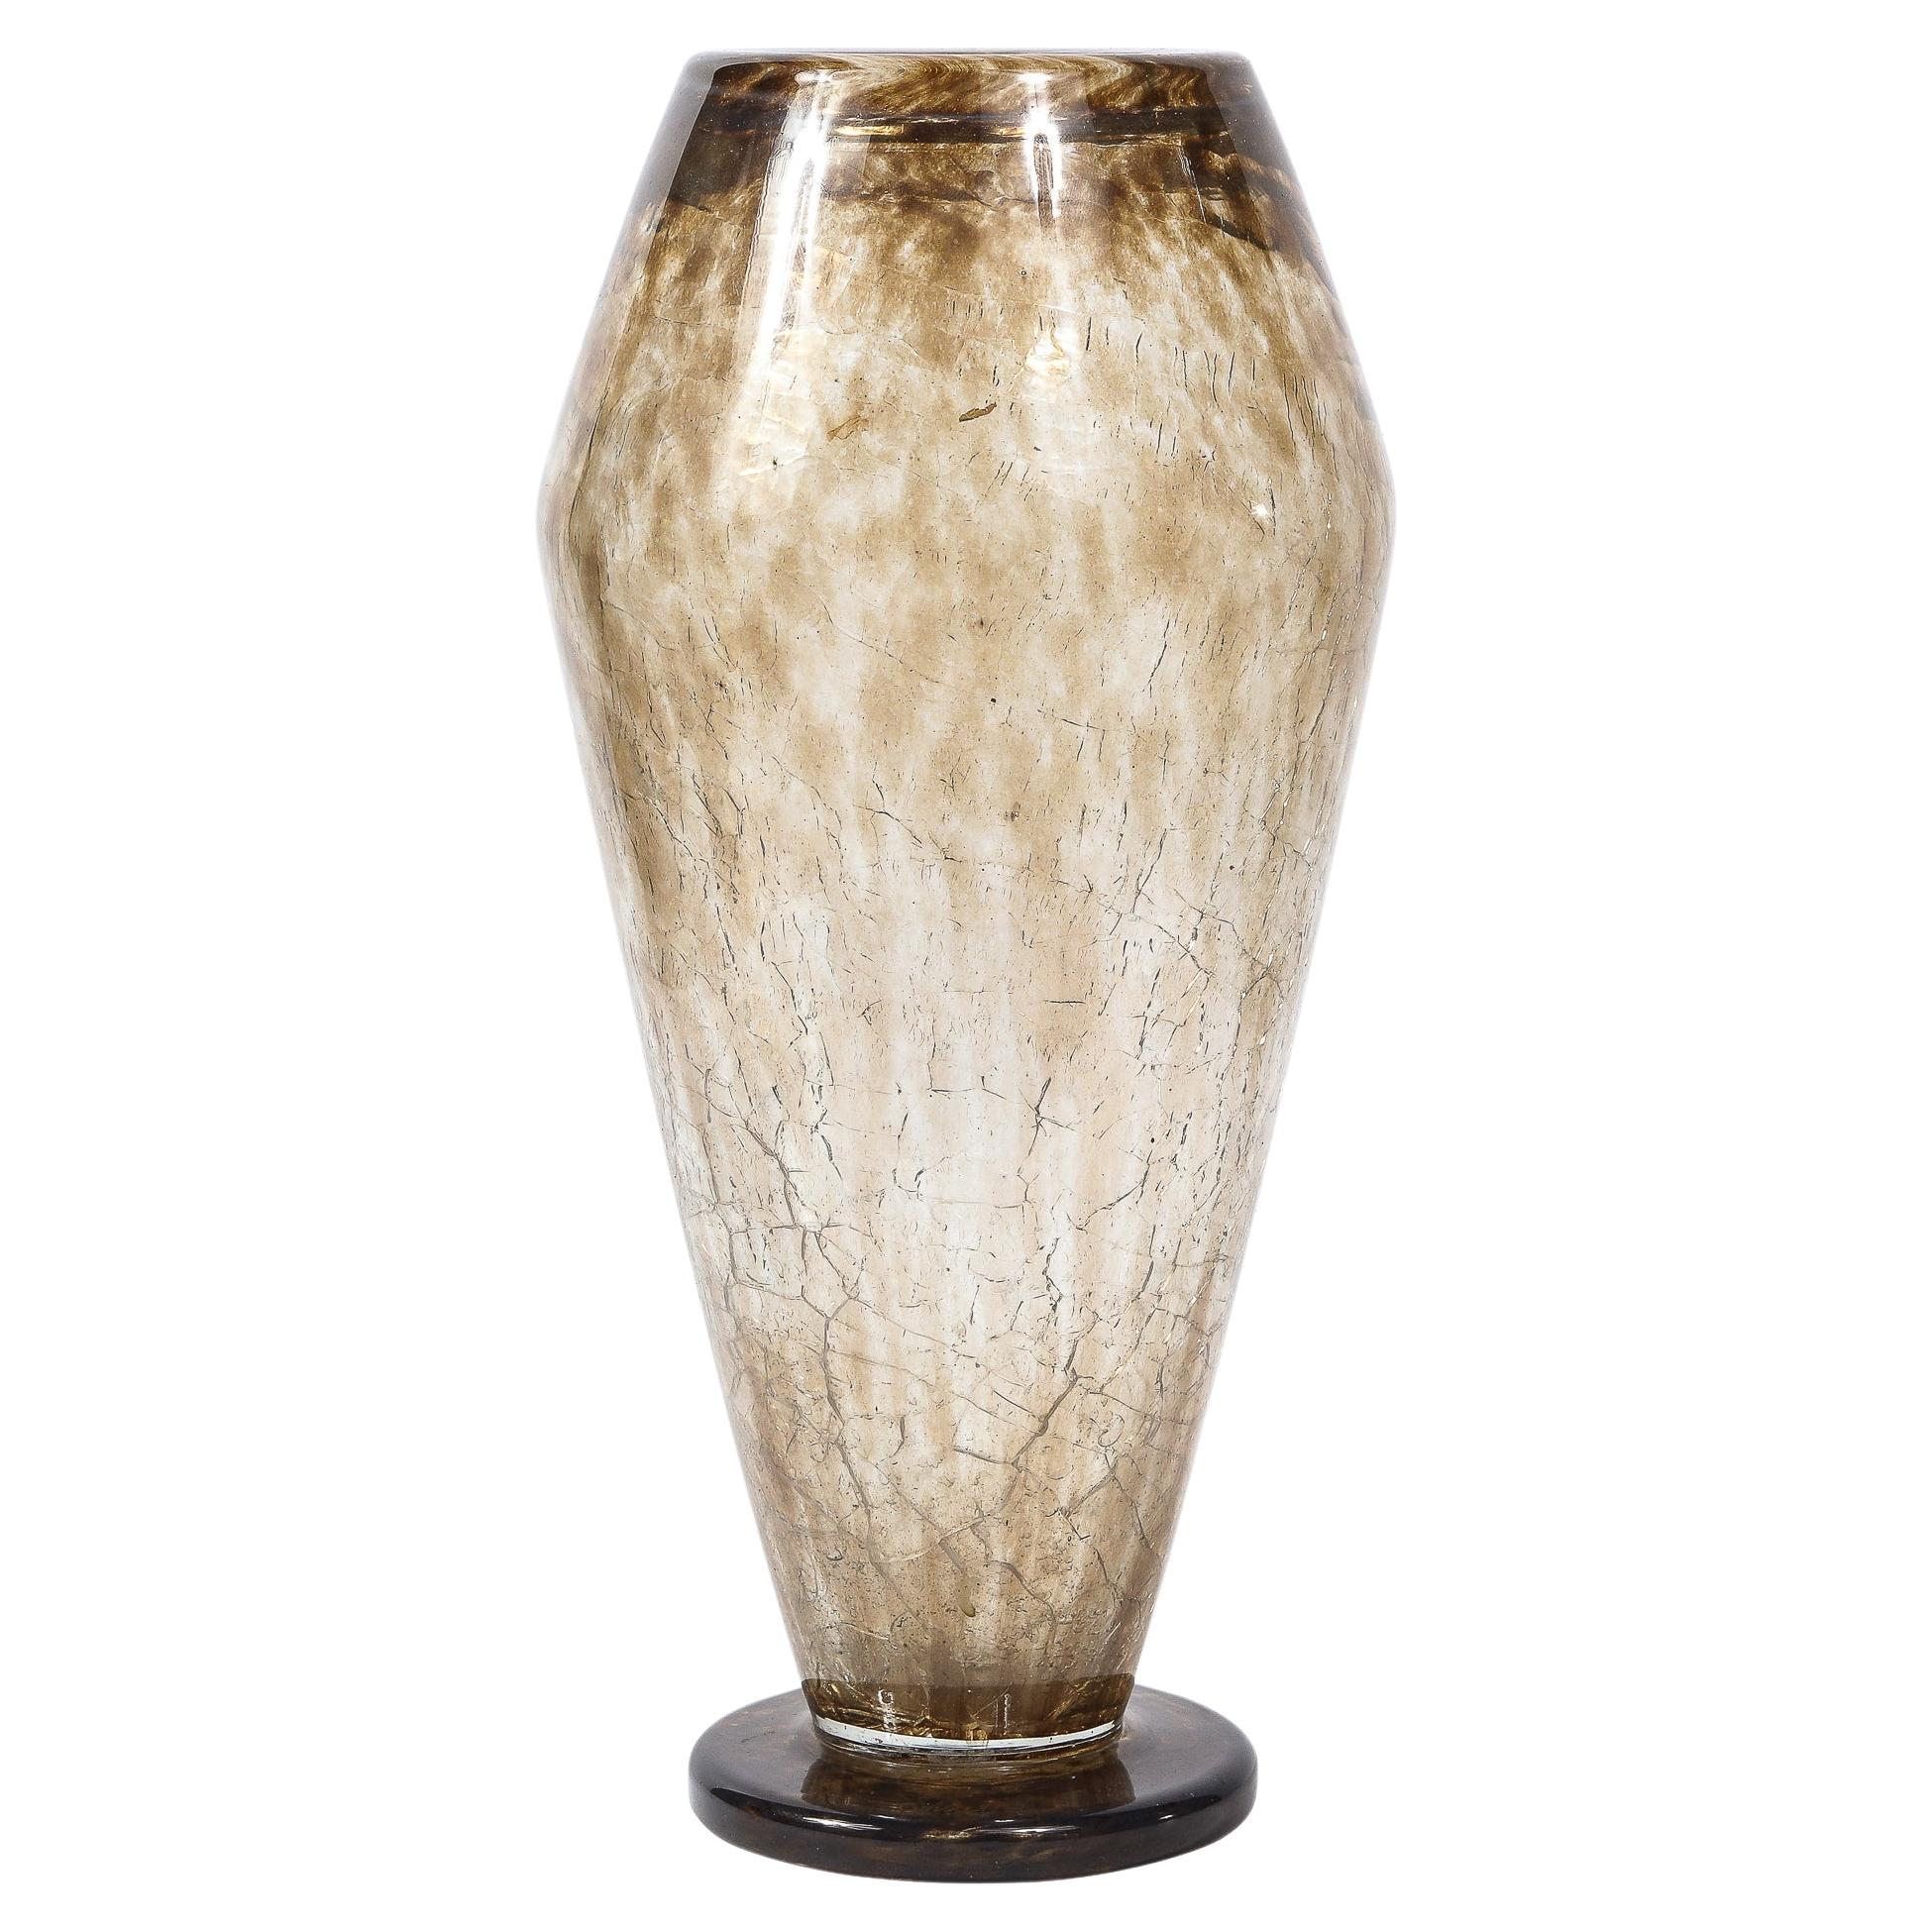 Museum Quality French Art Deco Topaz Craqueleur Glass Vase, Signed by Schneider For Sale